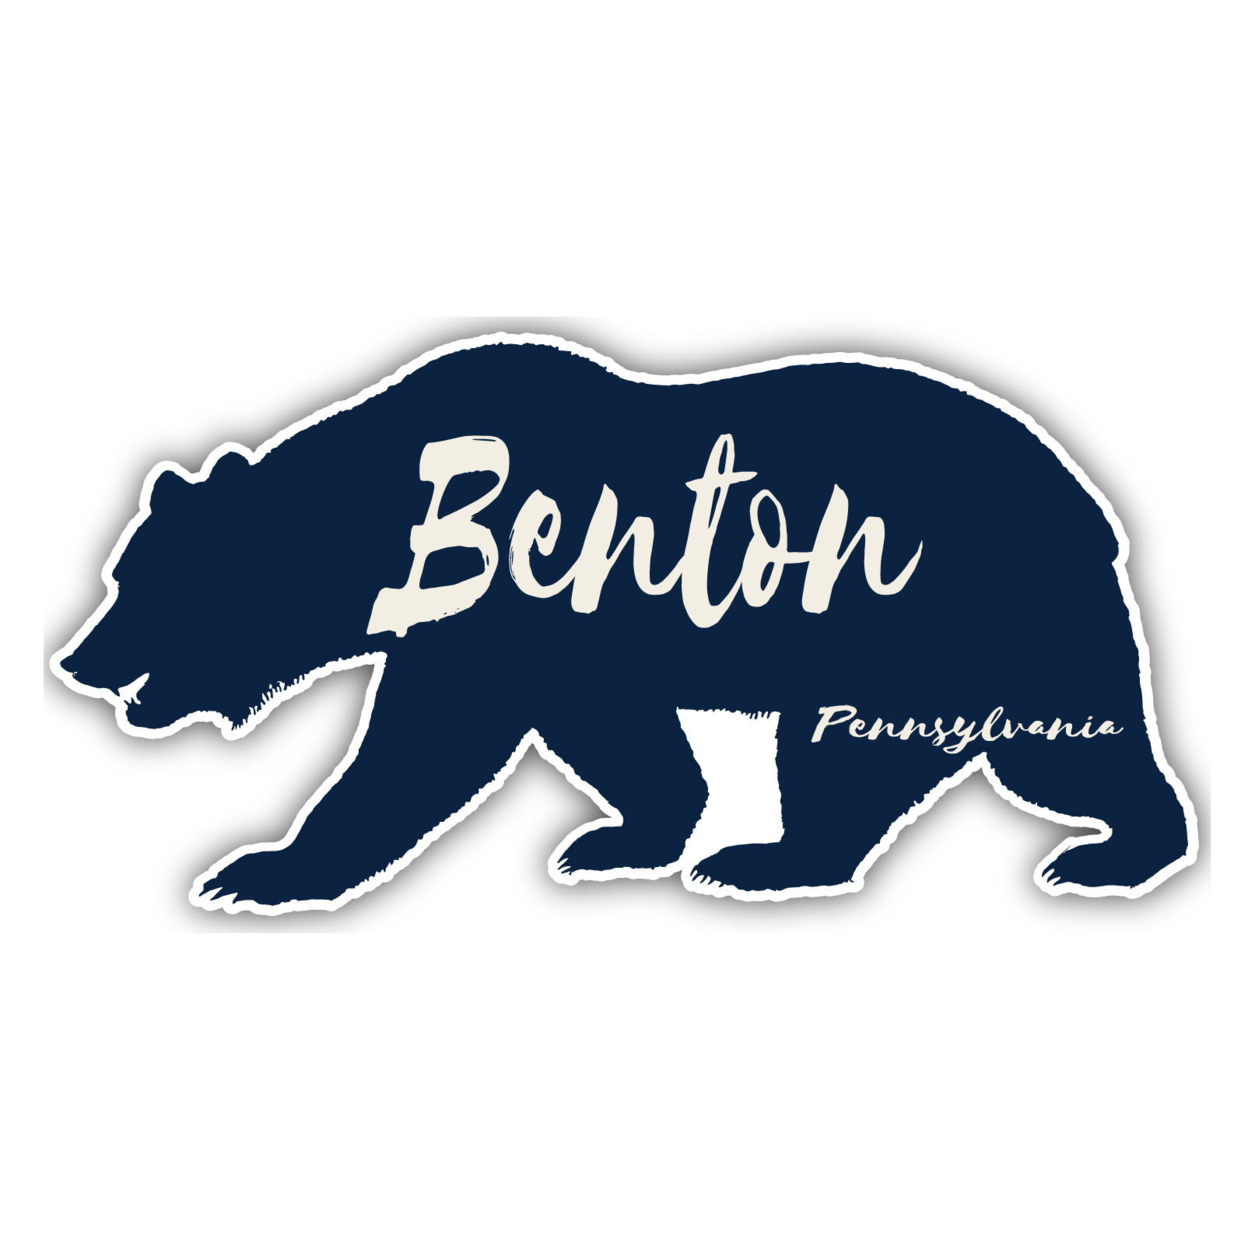 Benton Pennsylvania Souvenir Decorative Stickers (Choose Theme And Size) - Single Unit, 12-Inch, Bear